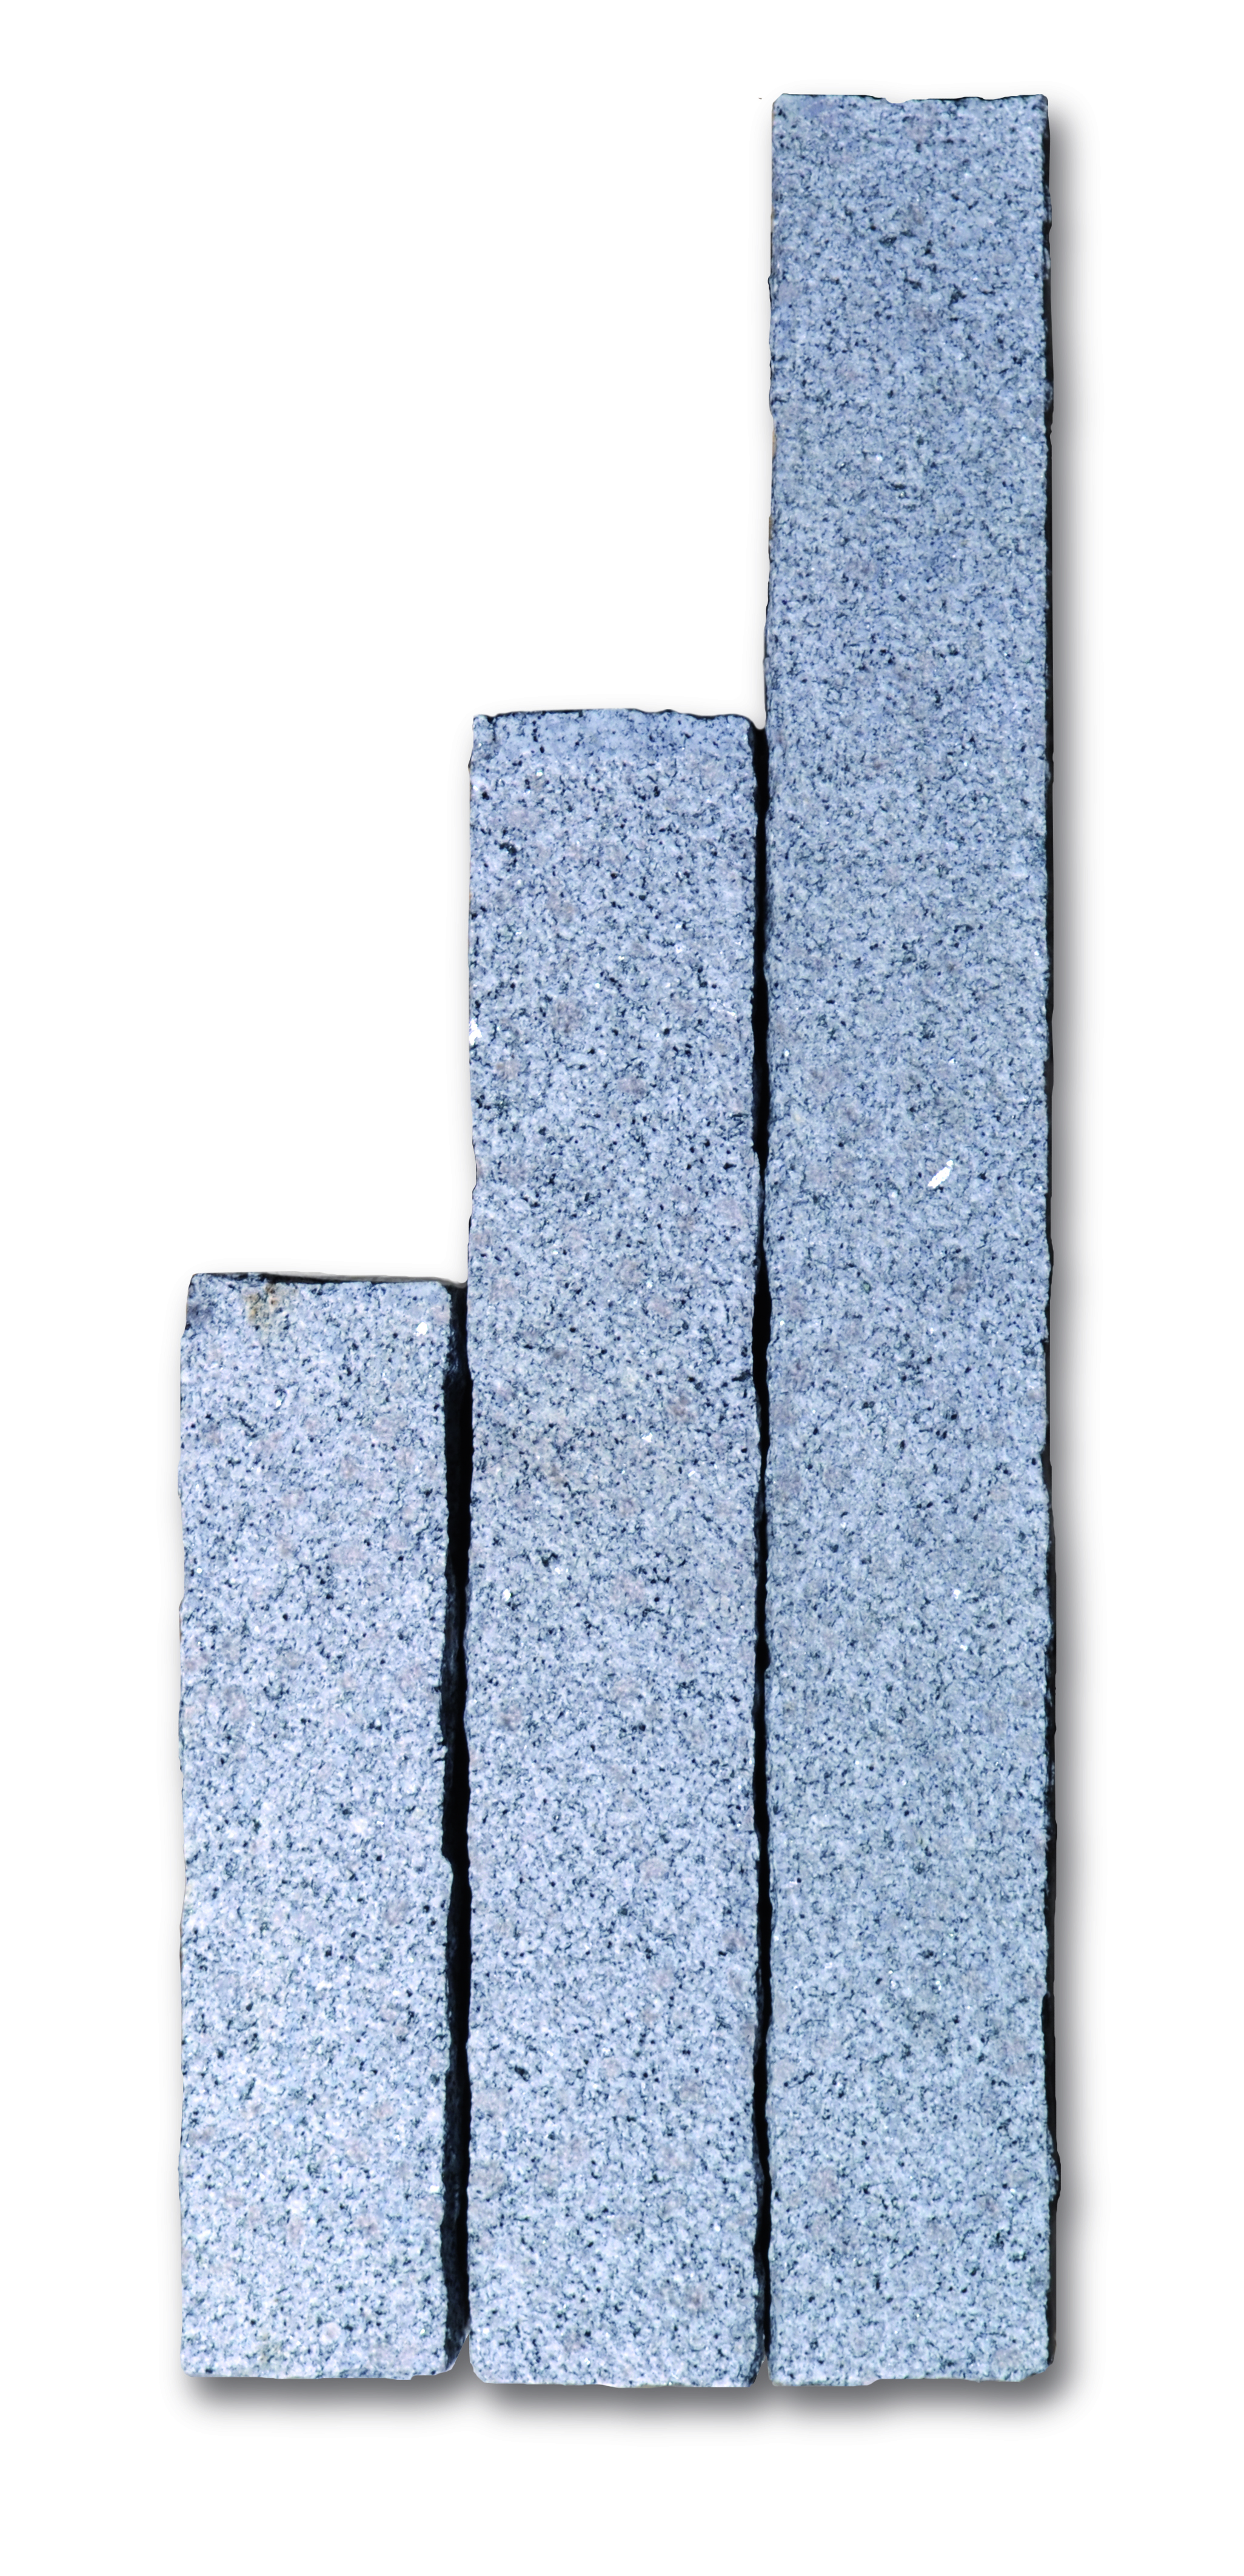 ZL OST Palisade BASIC gestockt 12x12x150cm grau Granit China